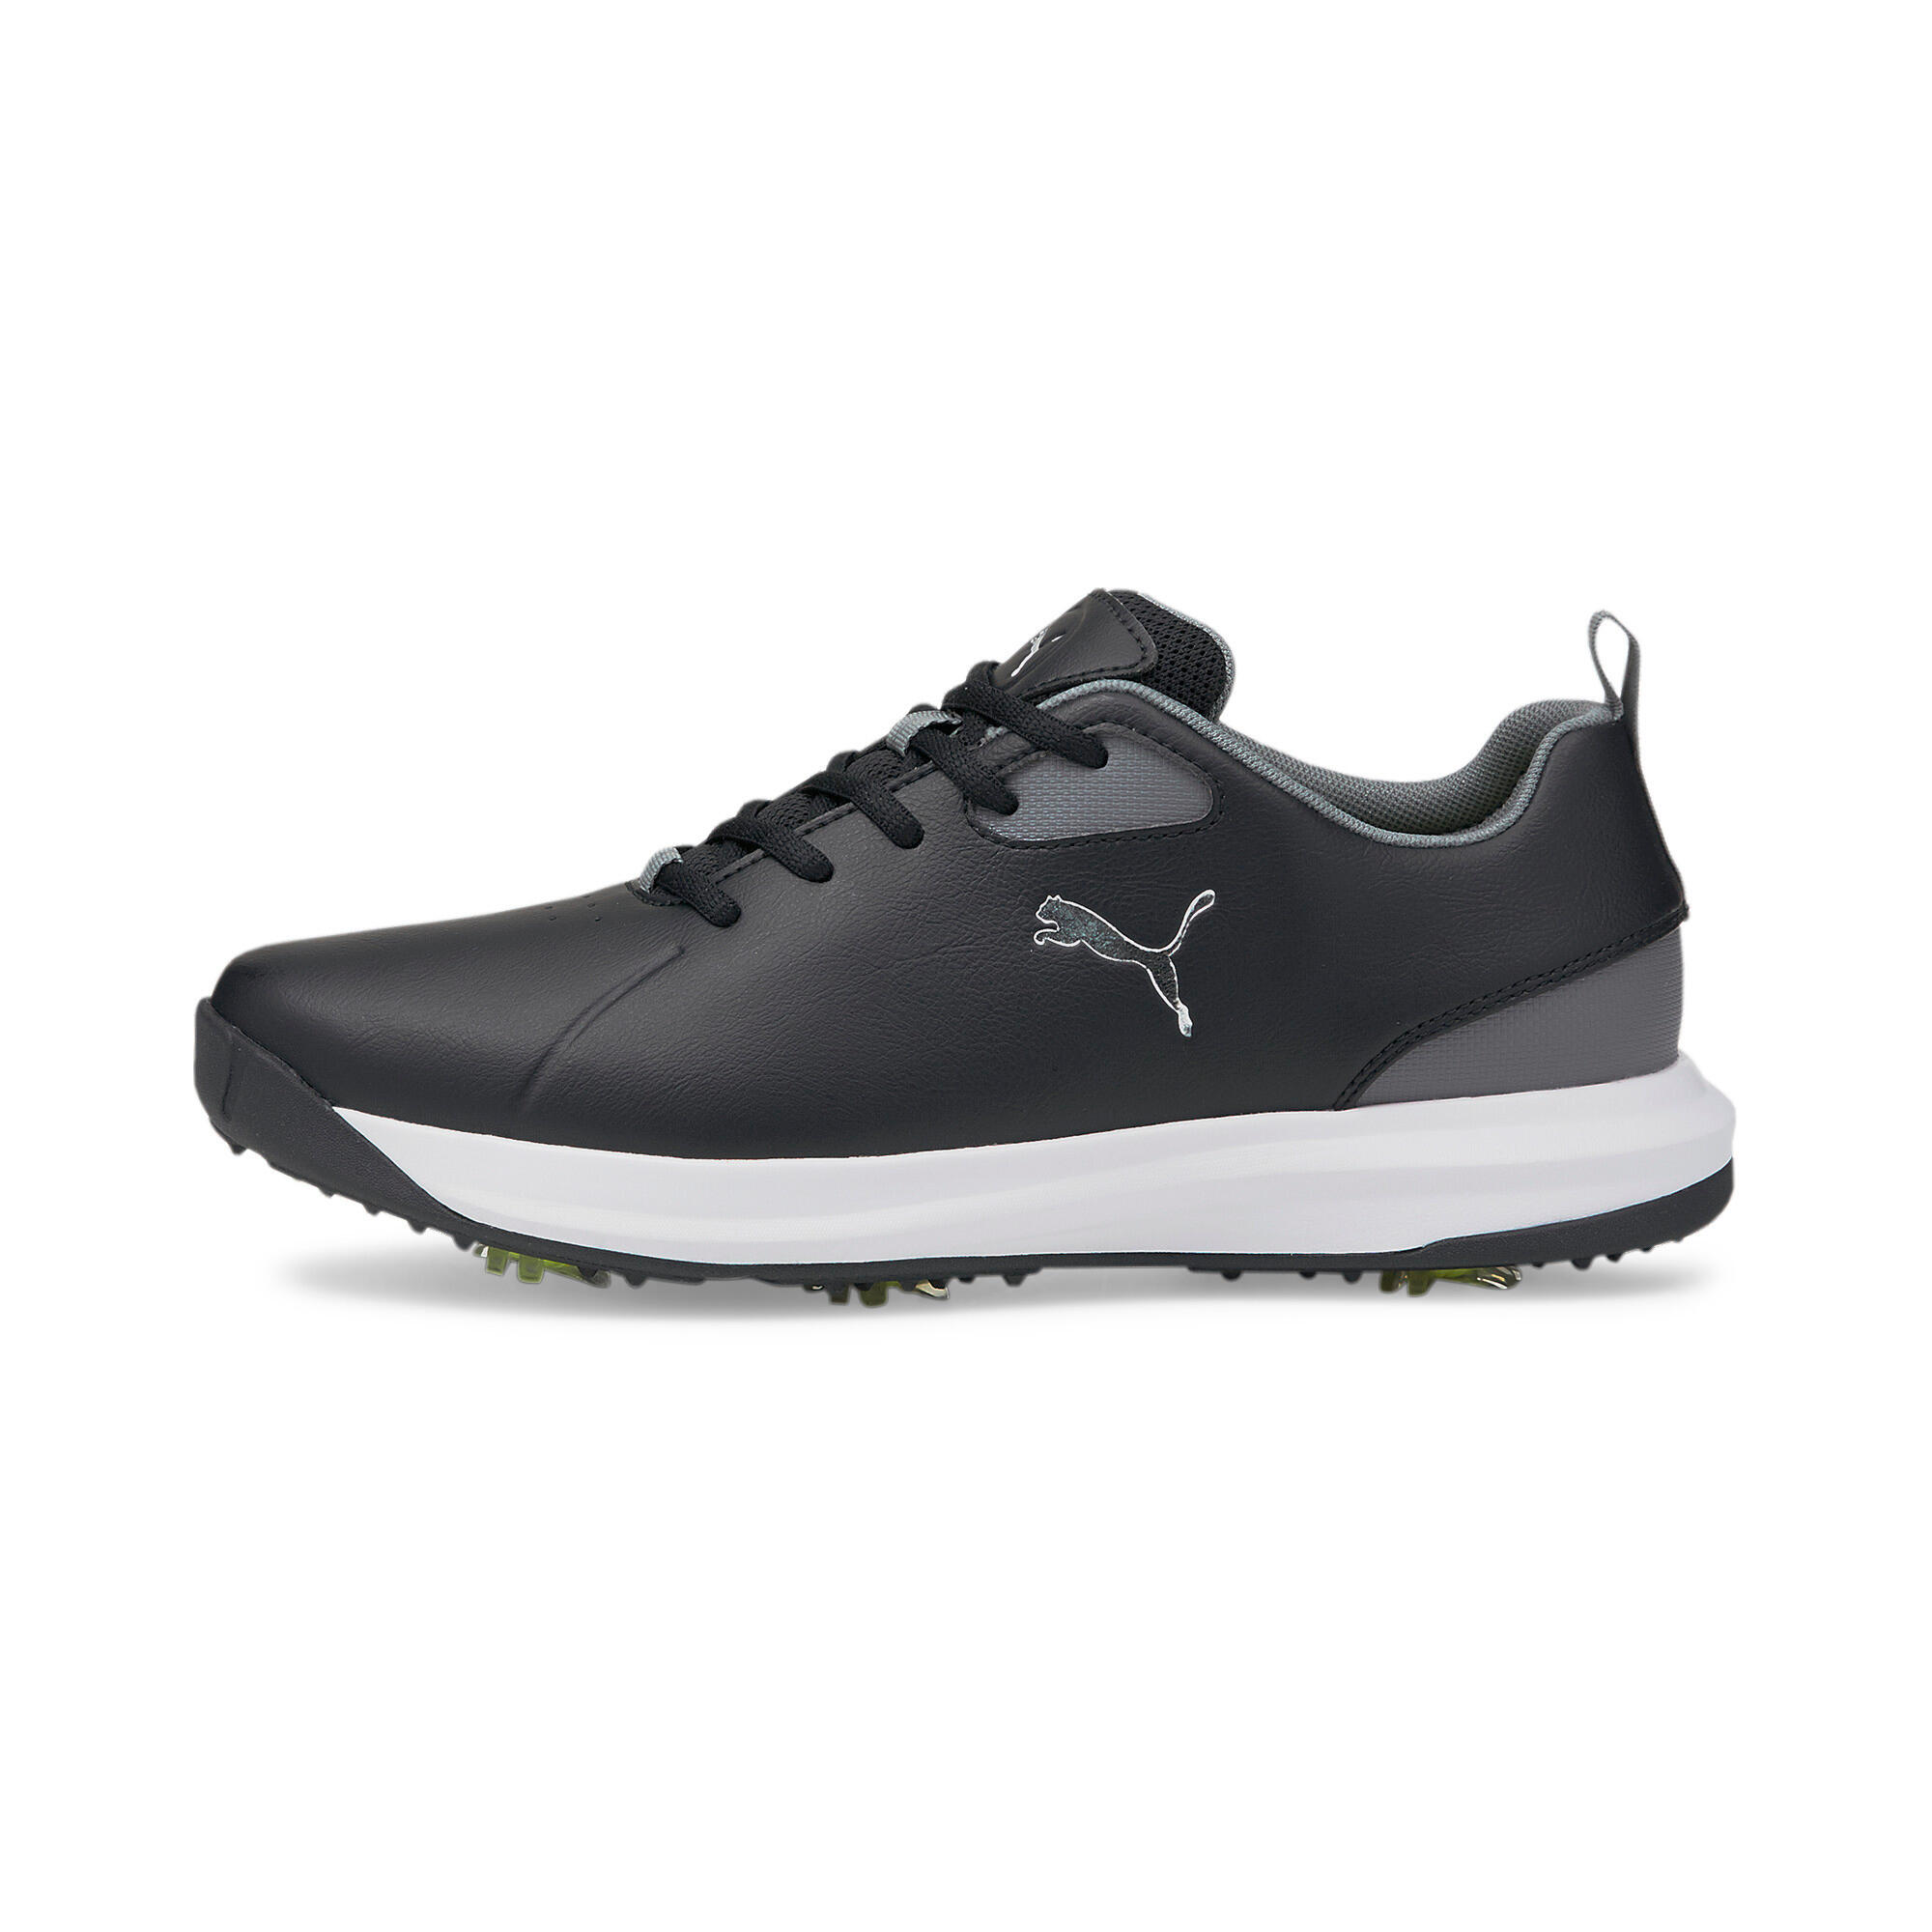 PUMA Mens FUSION FX Tech Golf Shoes - Black-Silver-Quiet Shade 1/7